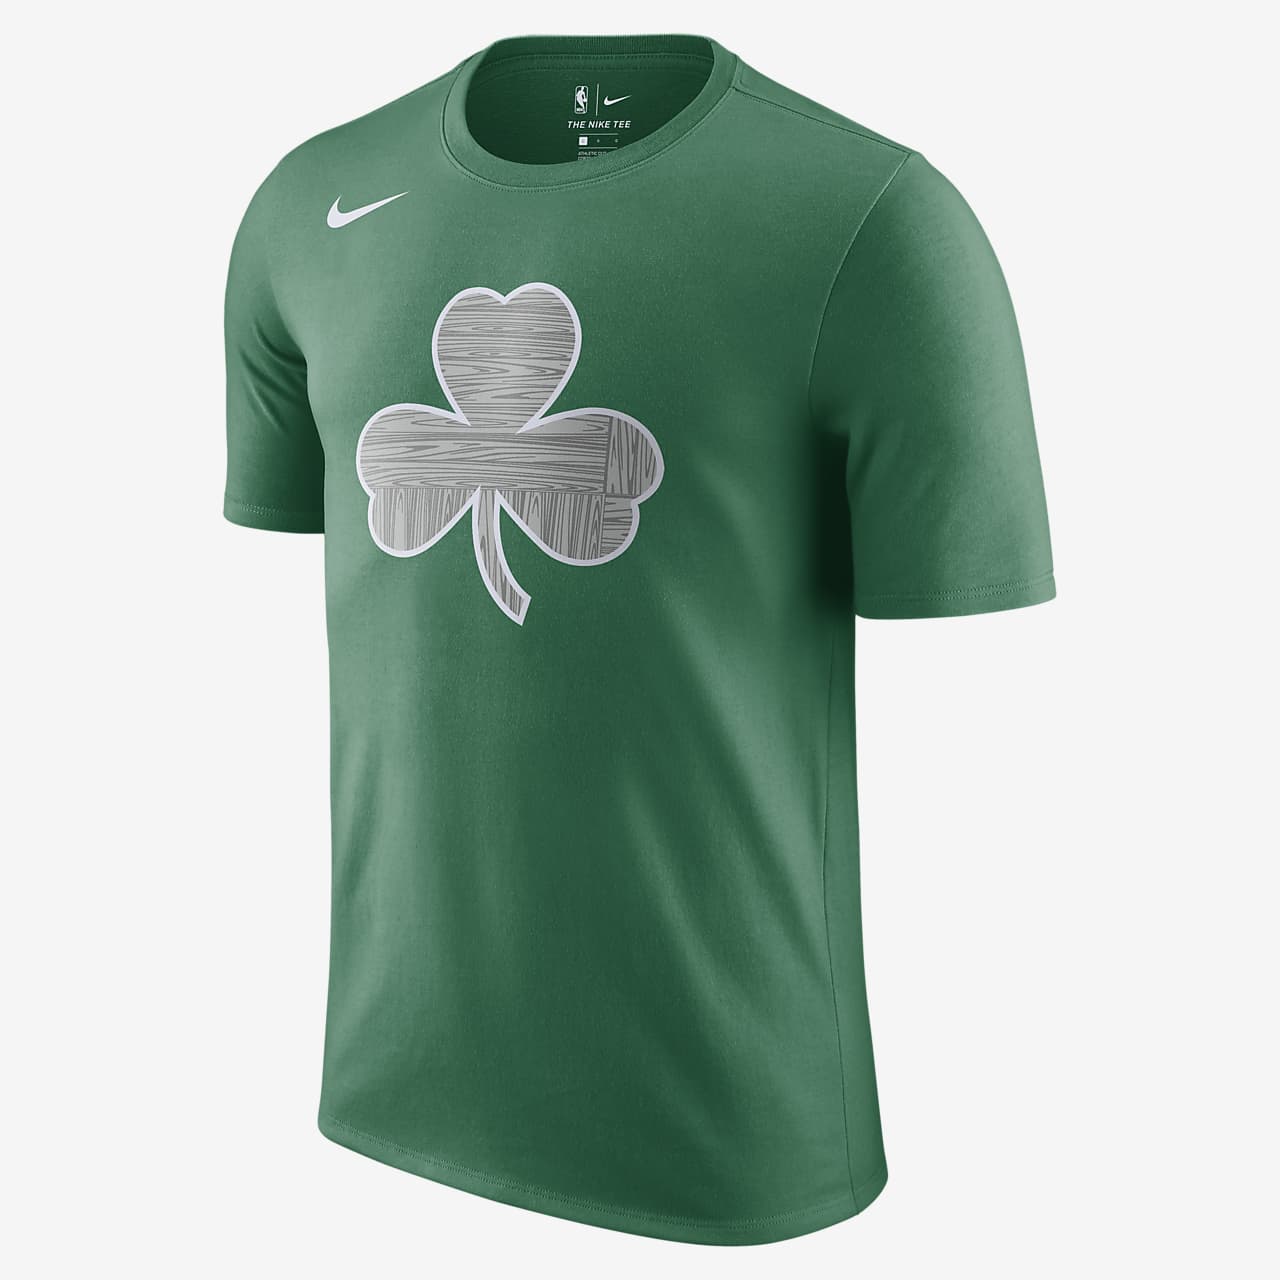 boston celtics city edition t shirt